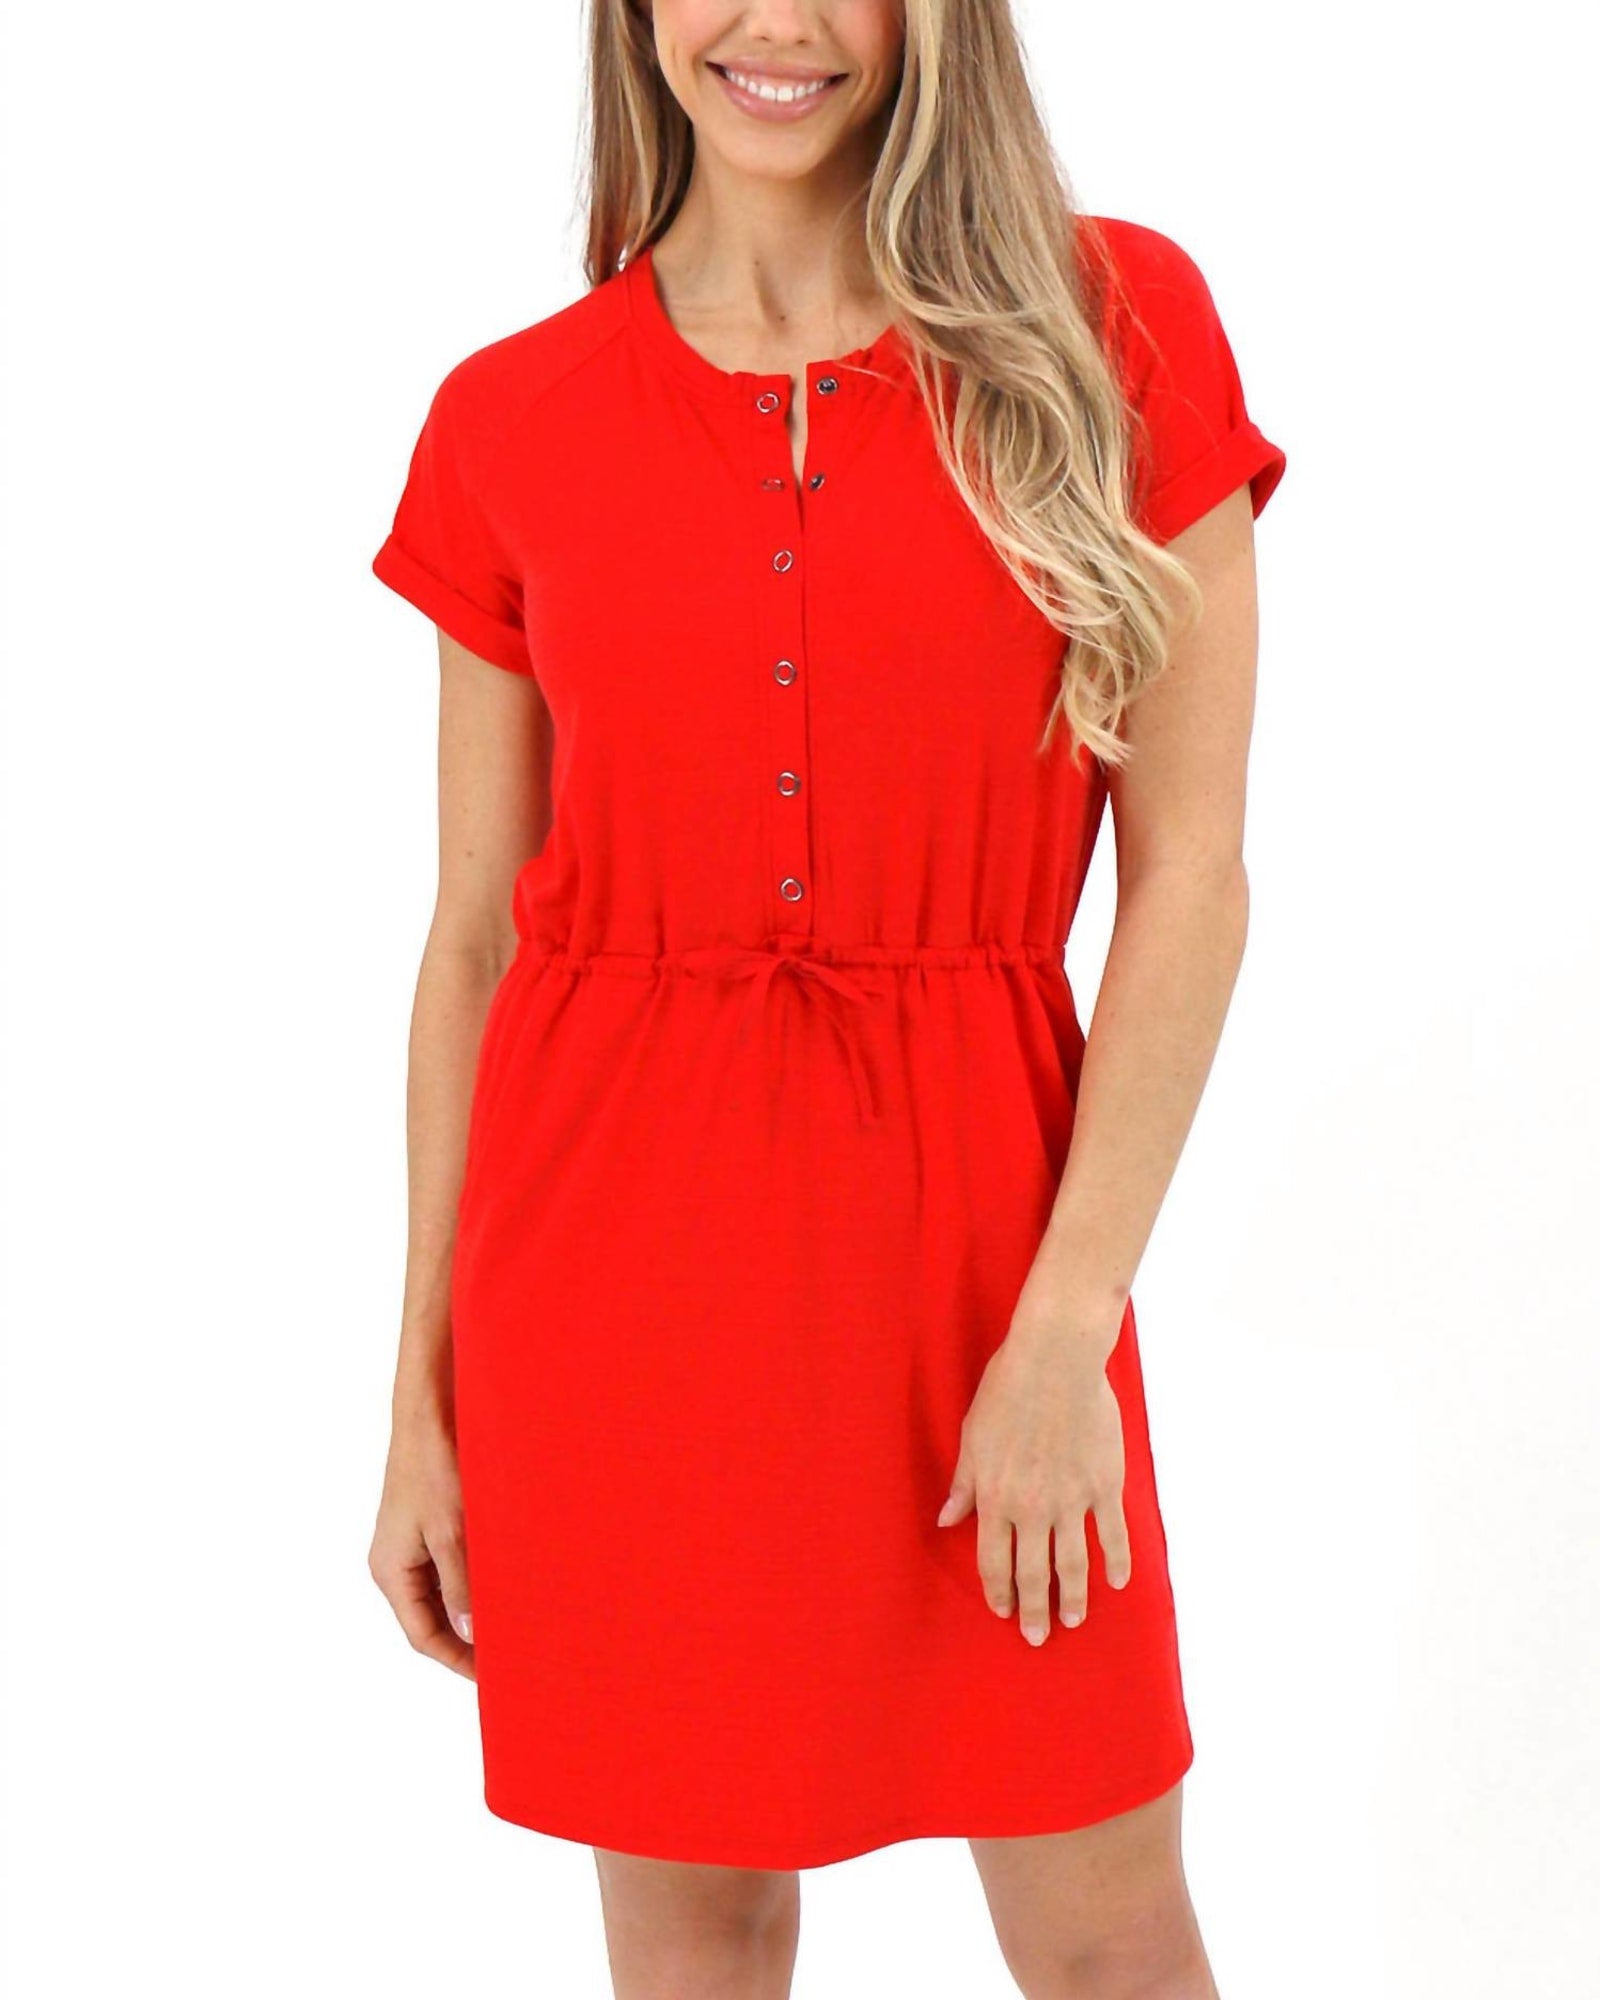 Raglan Tee Dress in Hot Red | Hot Red